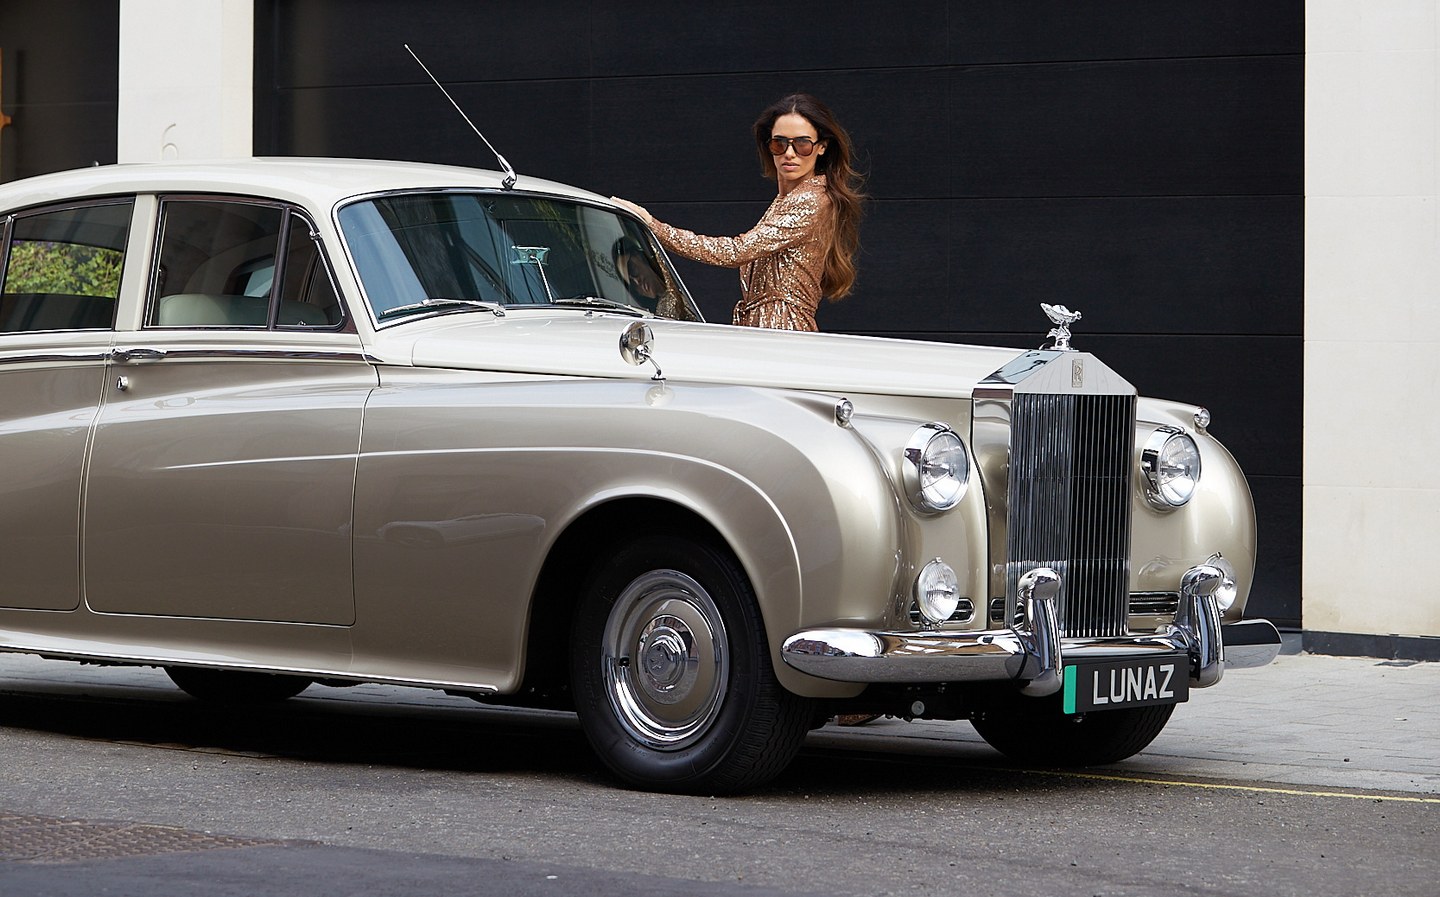 Lunaz converts Sophia Loren’s Rolls-Royce Silver Cloud to electric power